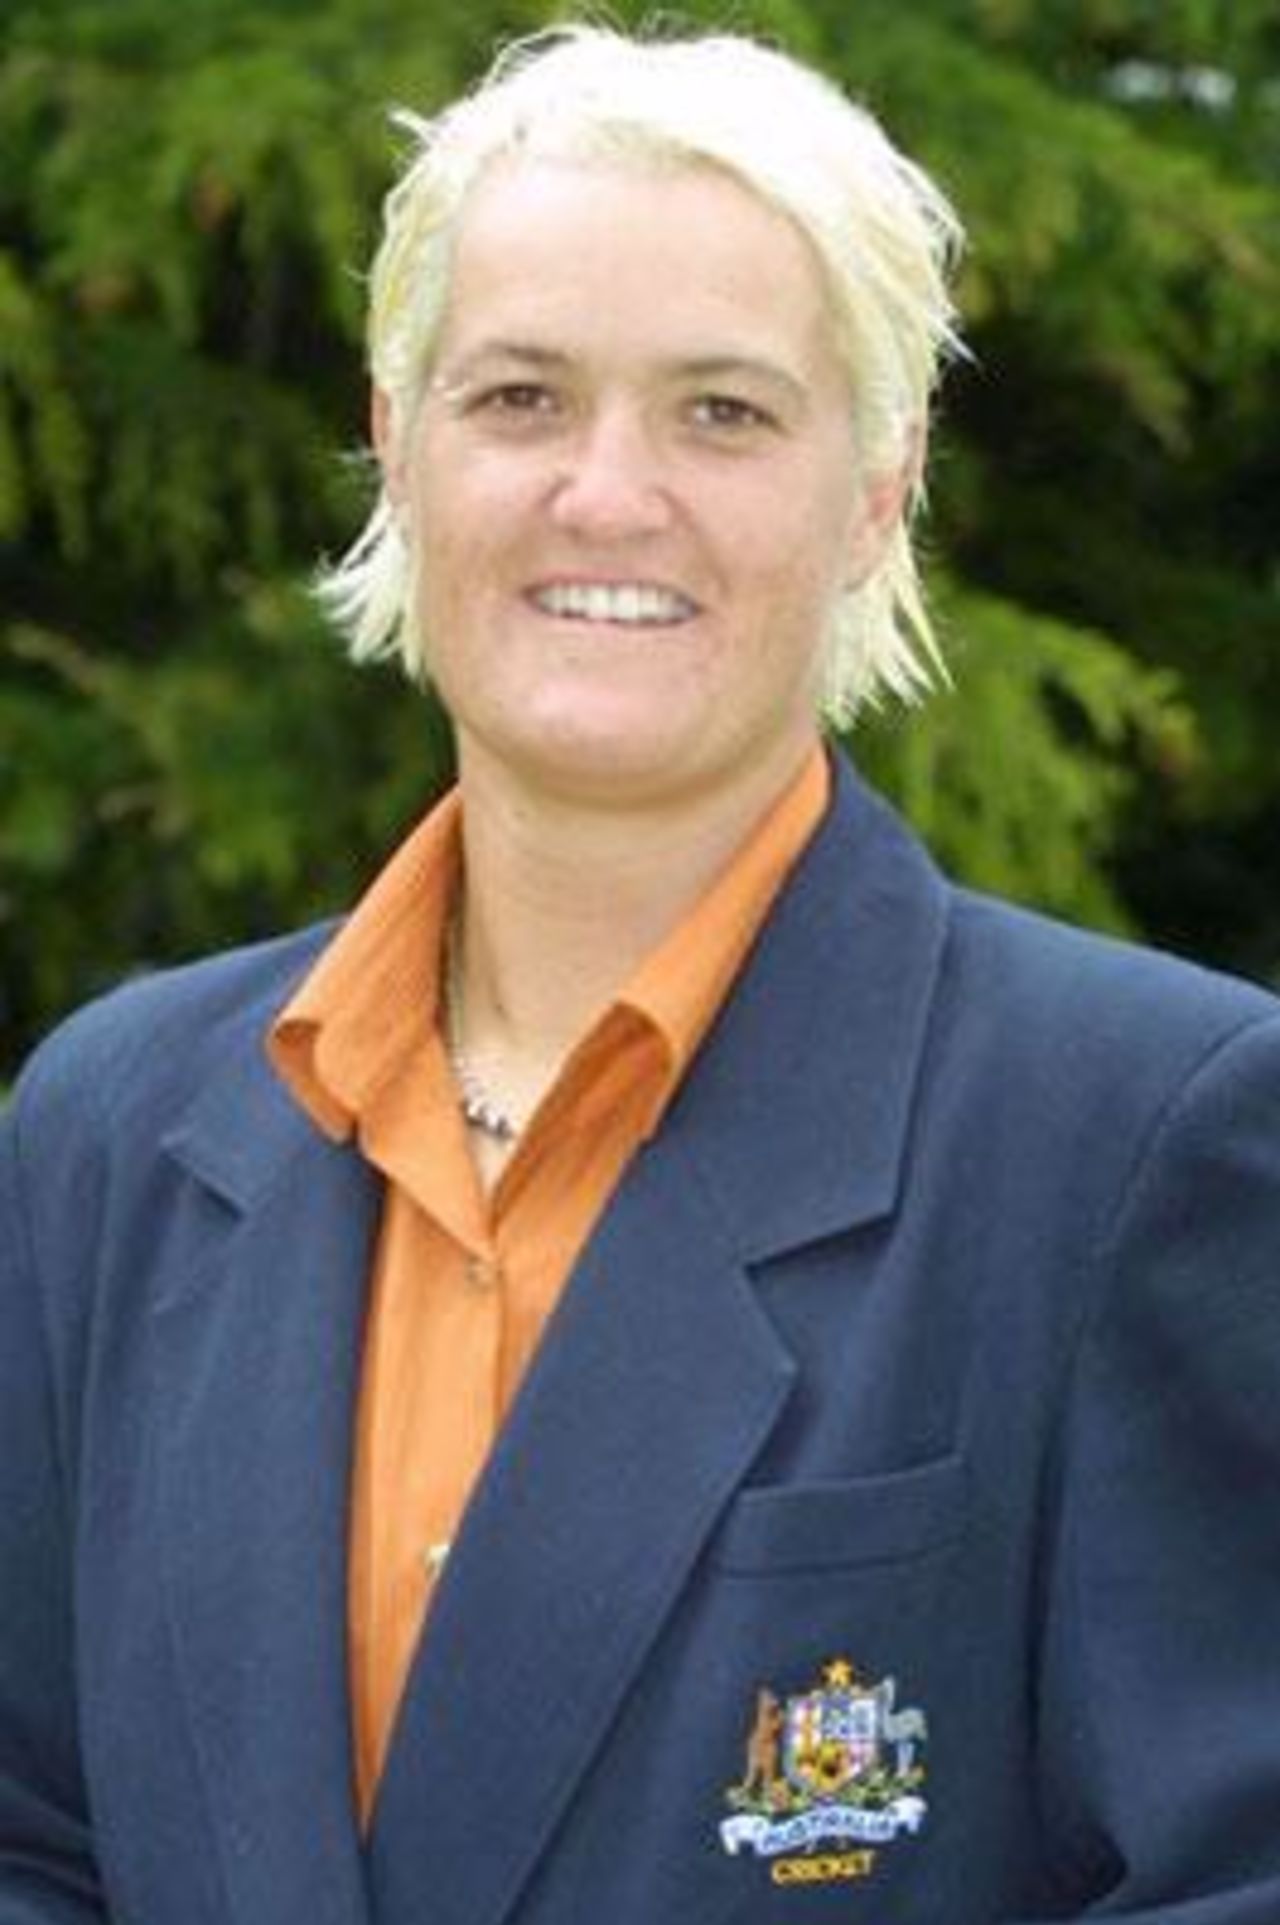 Portrait of Cherie Bambury - Australia player in the CricInfo Women's World Cup 2000